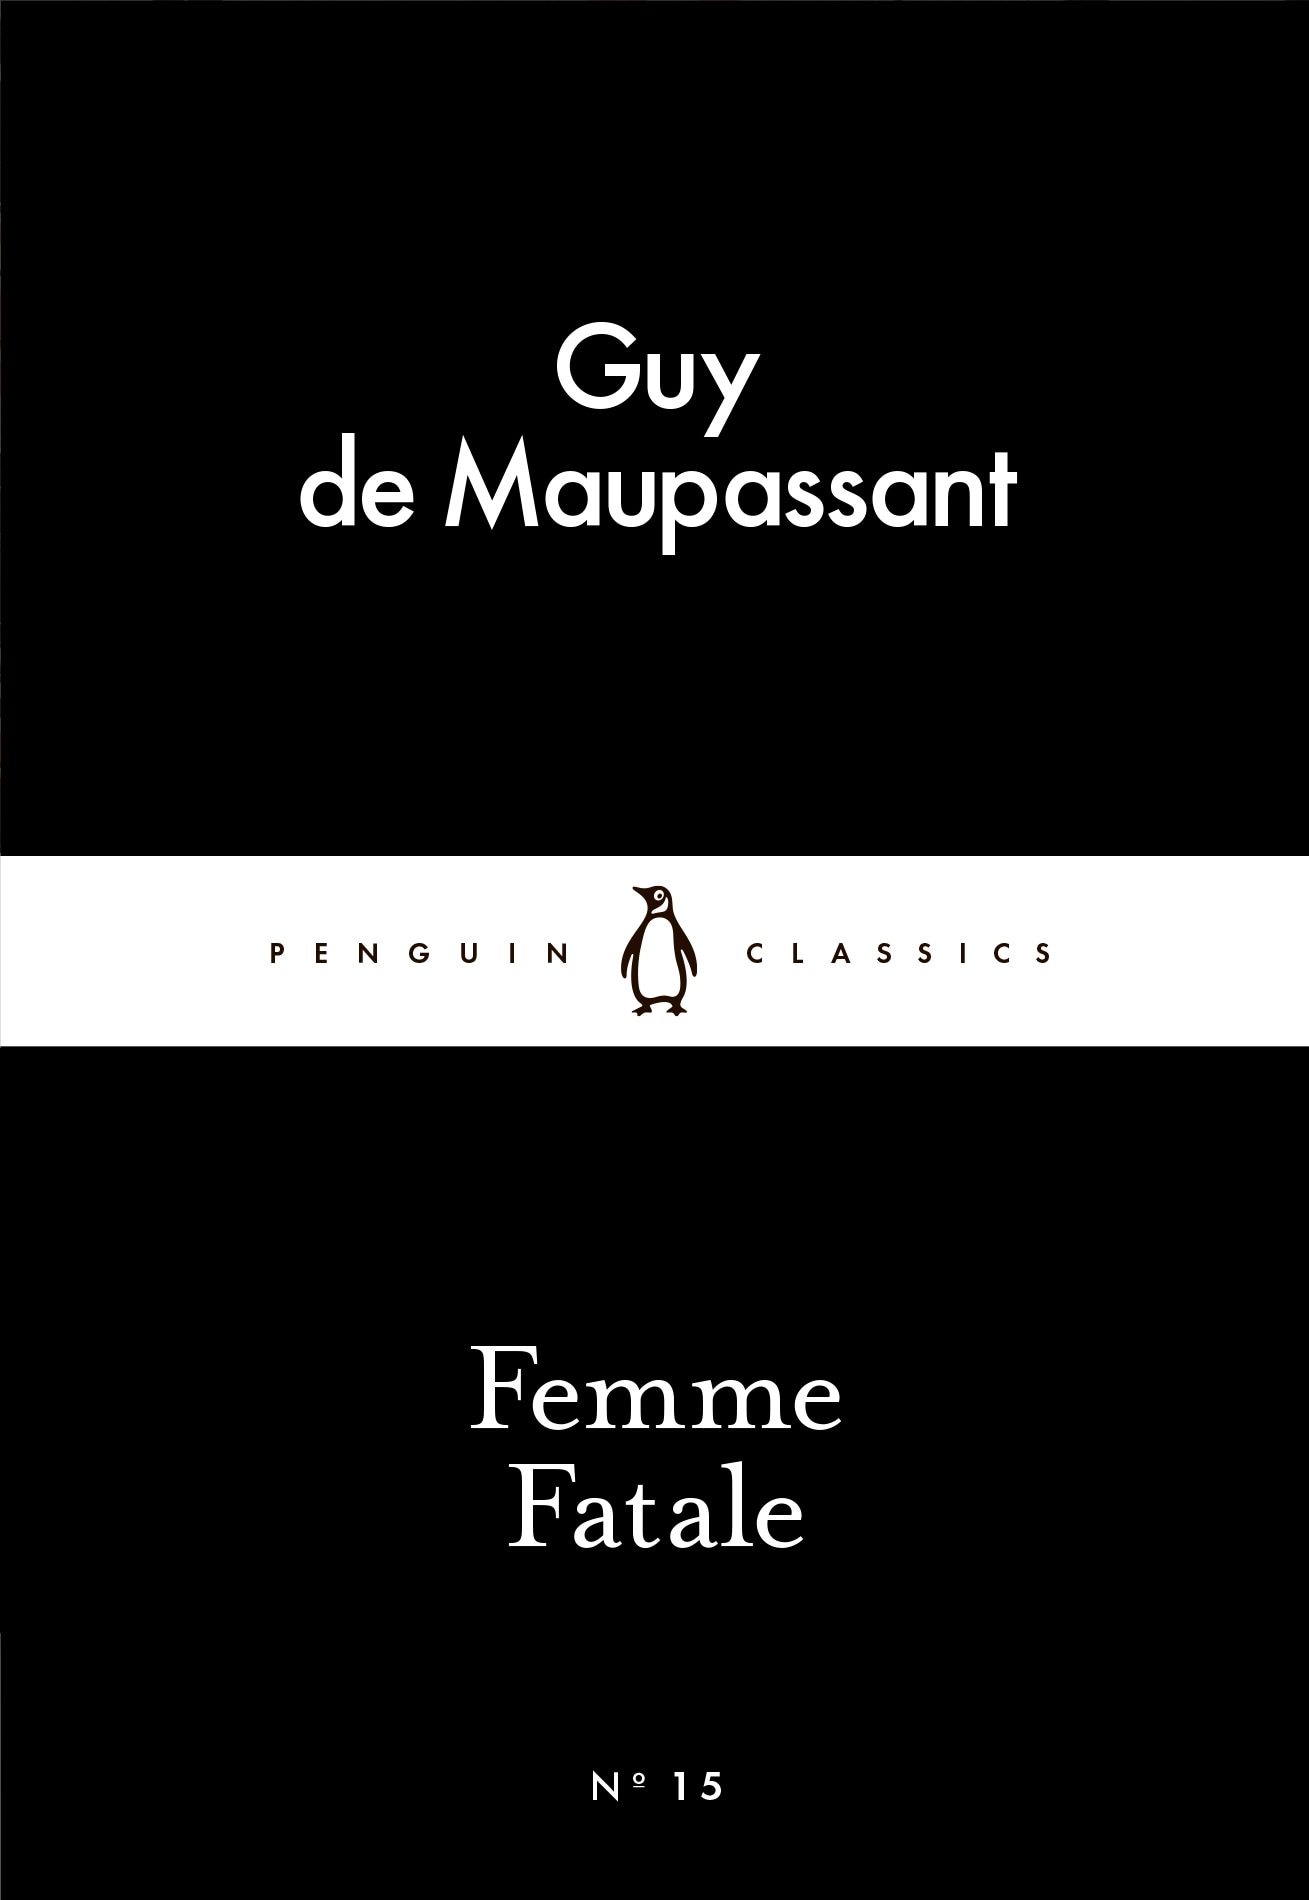 Book “Femme Fatale” by Guy de Maupassant — February 26, 2015